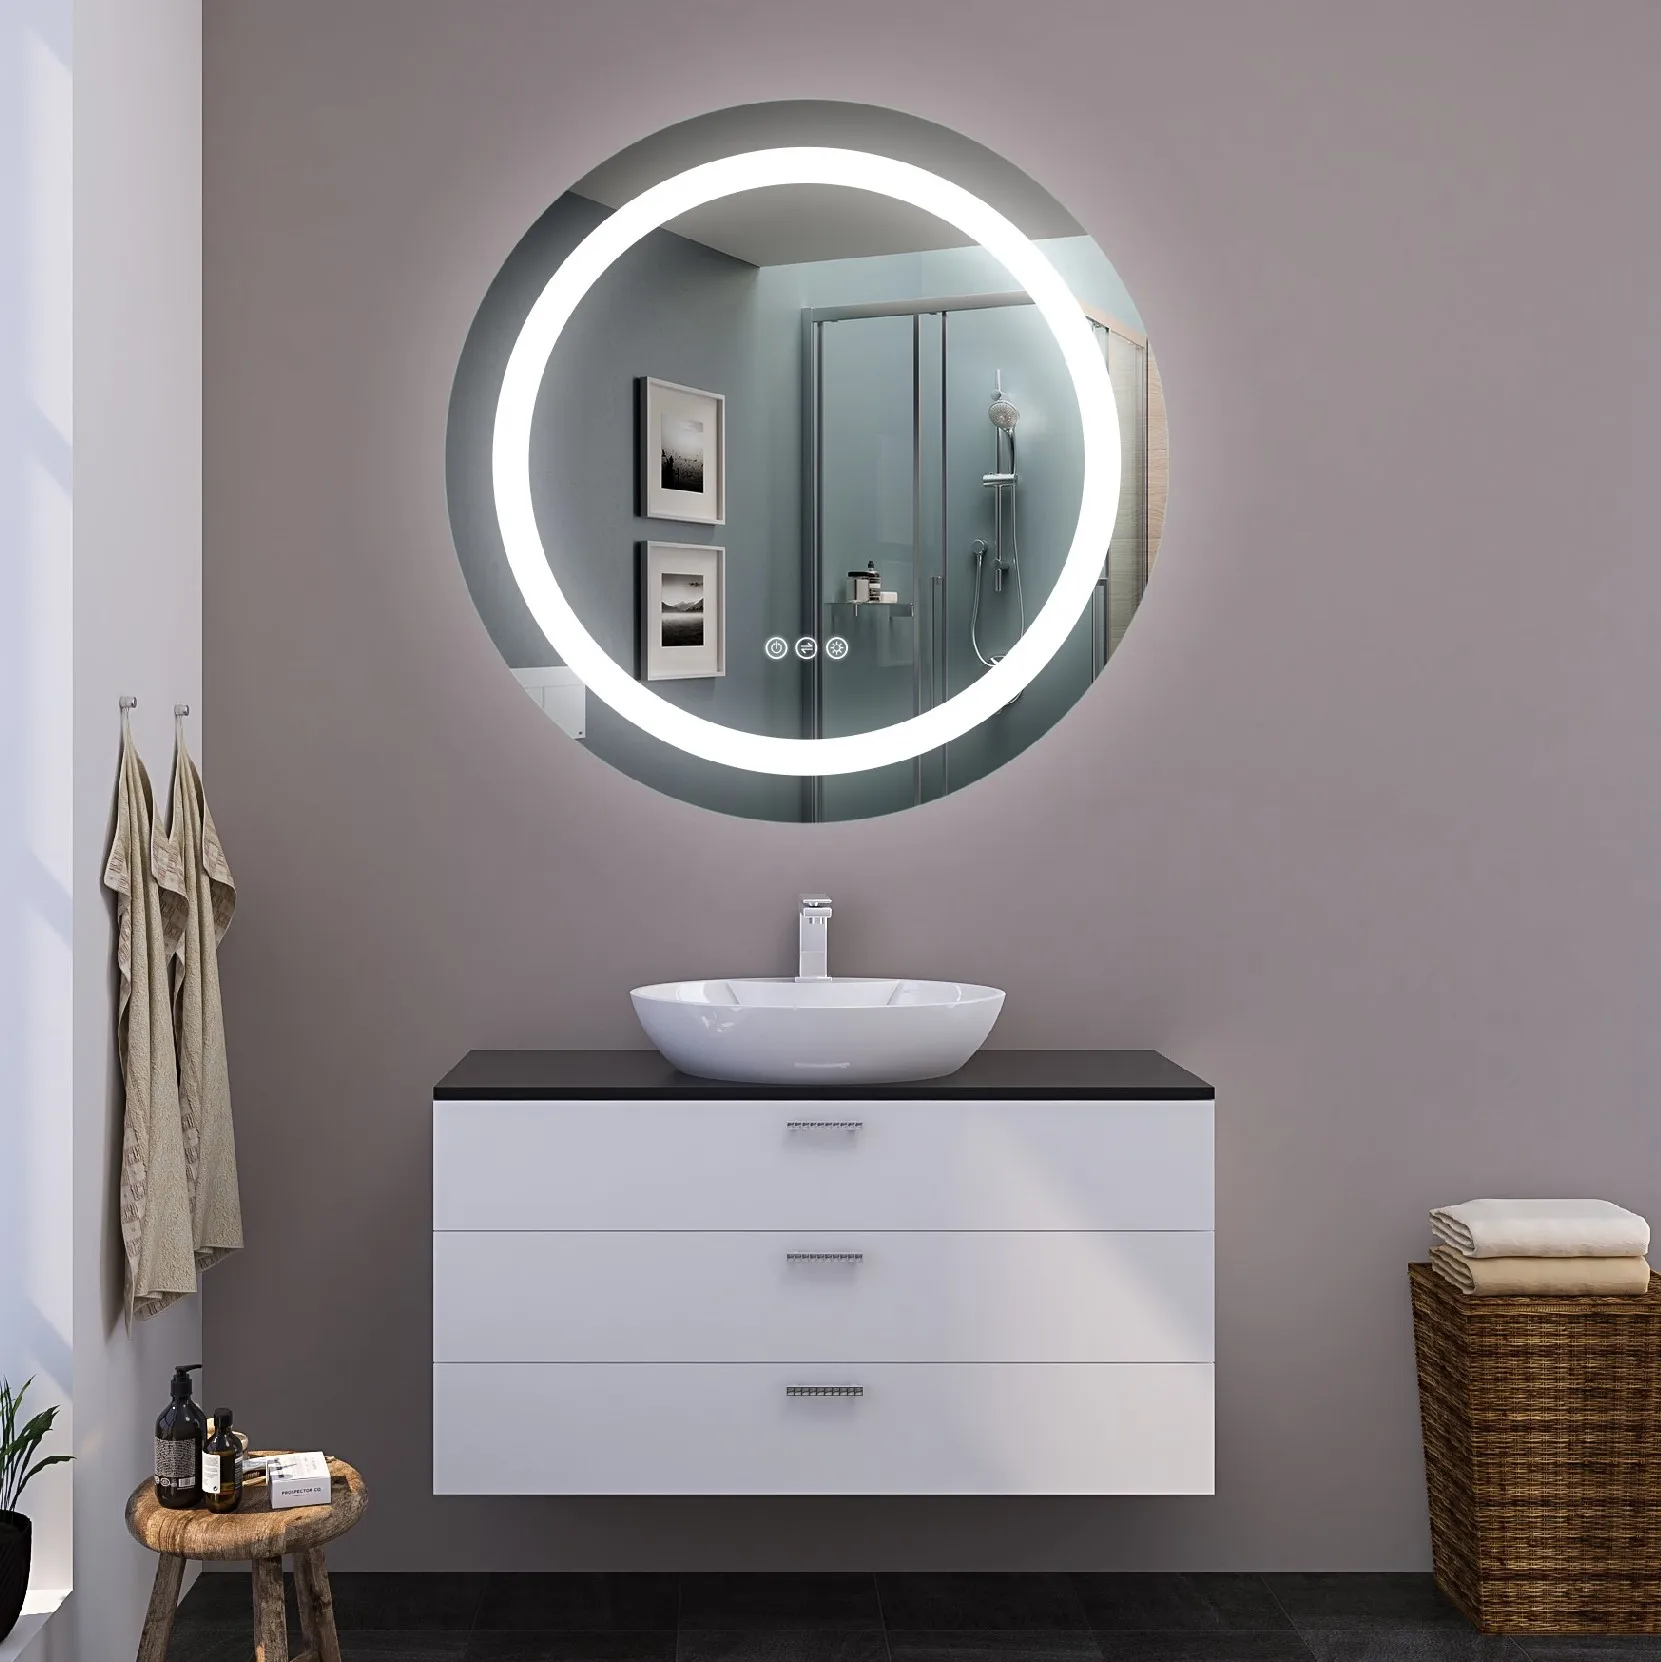 Professional bathroom led mirror light screen touch bathroom mirror for led bathroom mirror light